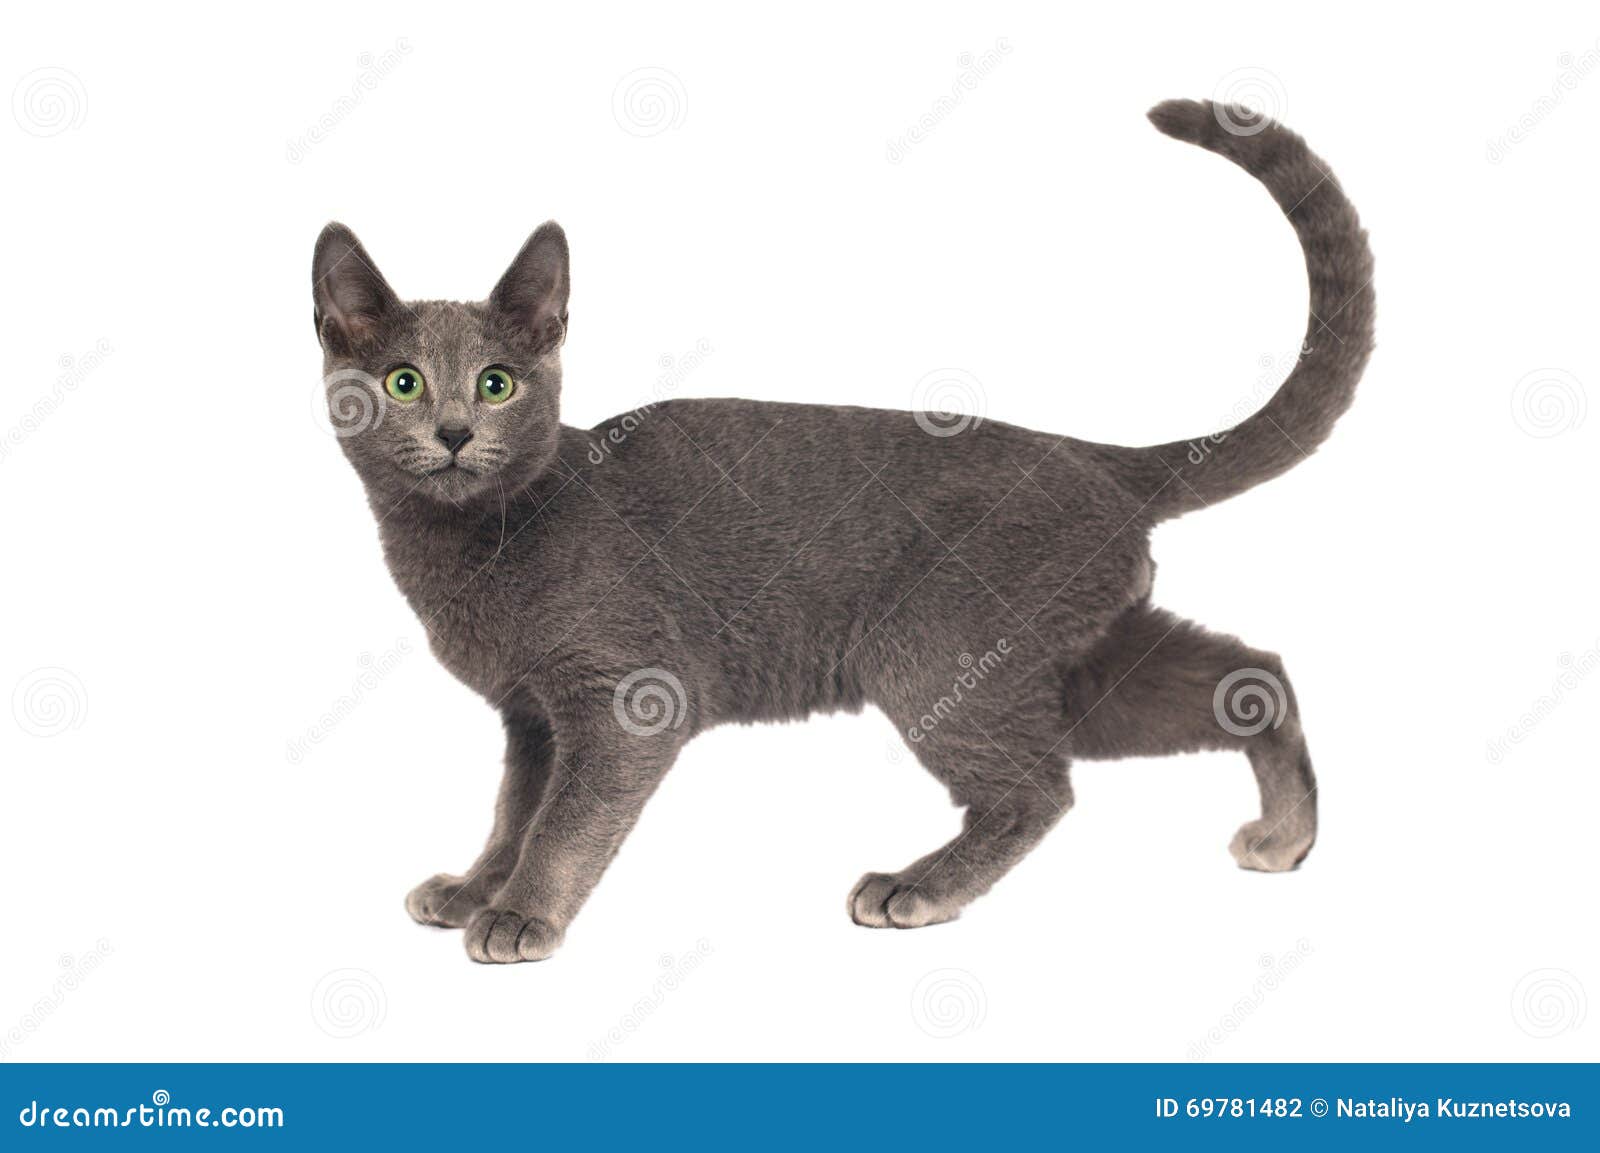  Russian  Blue  Purebred  Kitten Stock Photo Image of silver 